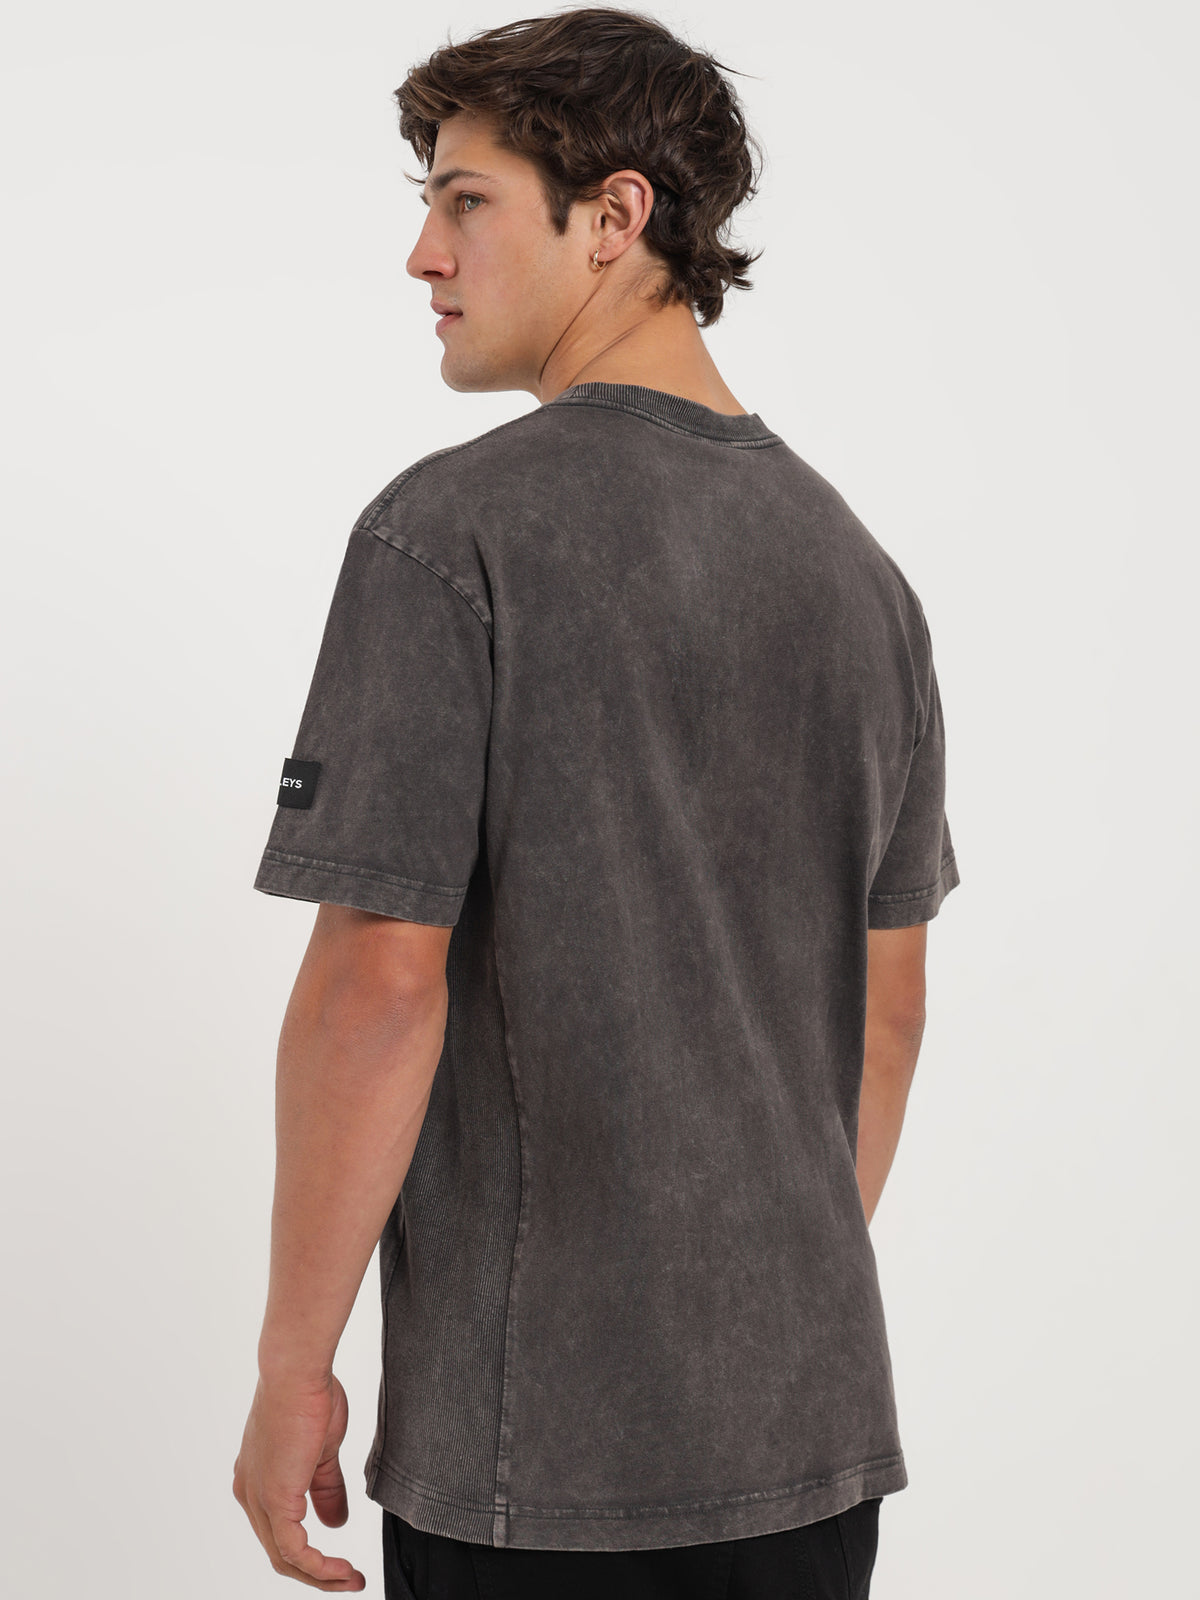 Micro Staple T-Shirt in Coal